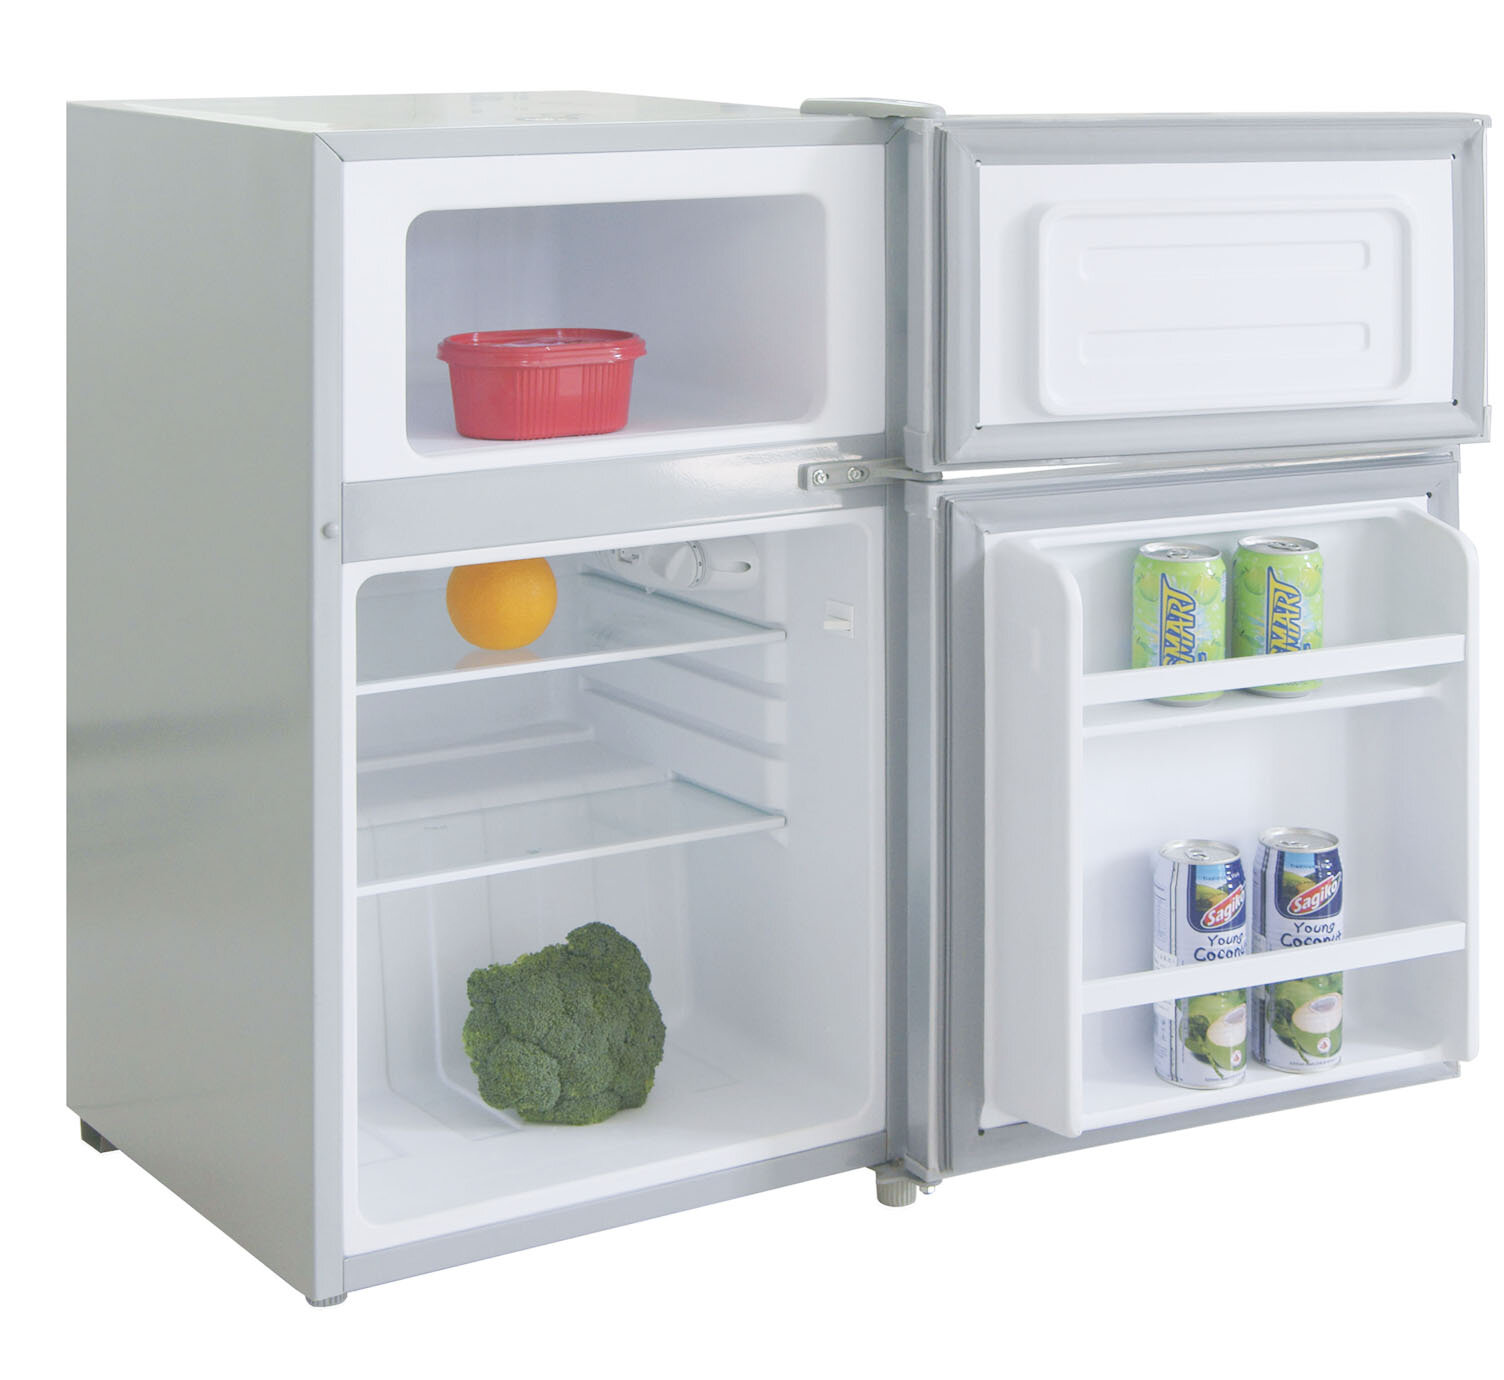 Igloo 2 Door 3.2 cu ft Refrigerator Freezer Capacity Compact Fridge Cooler White eBay